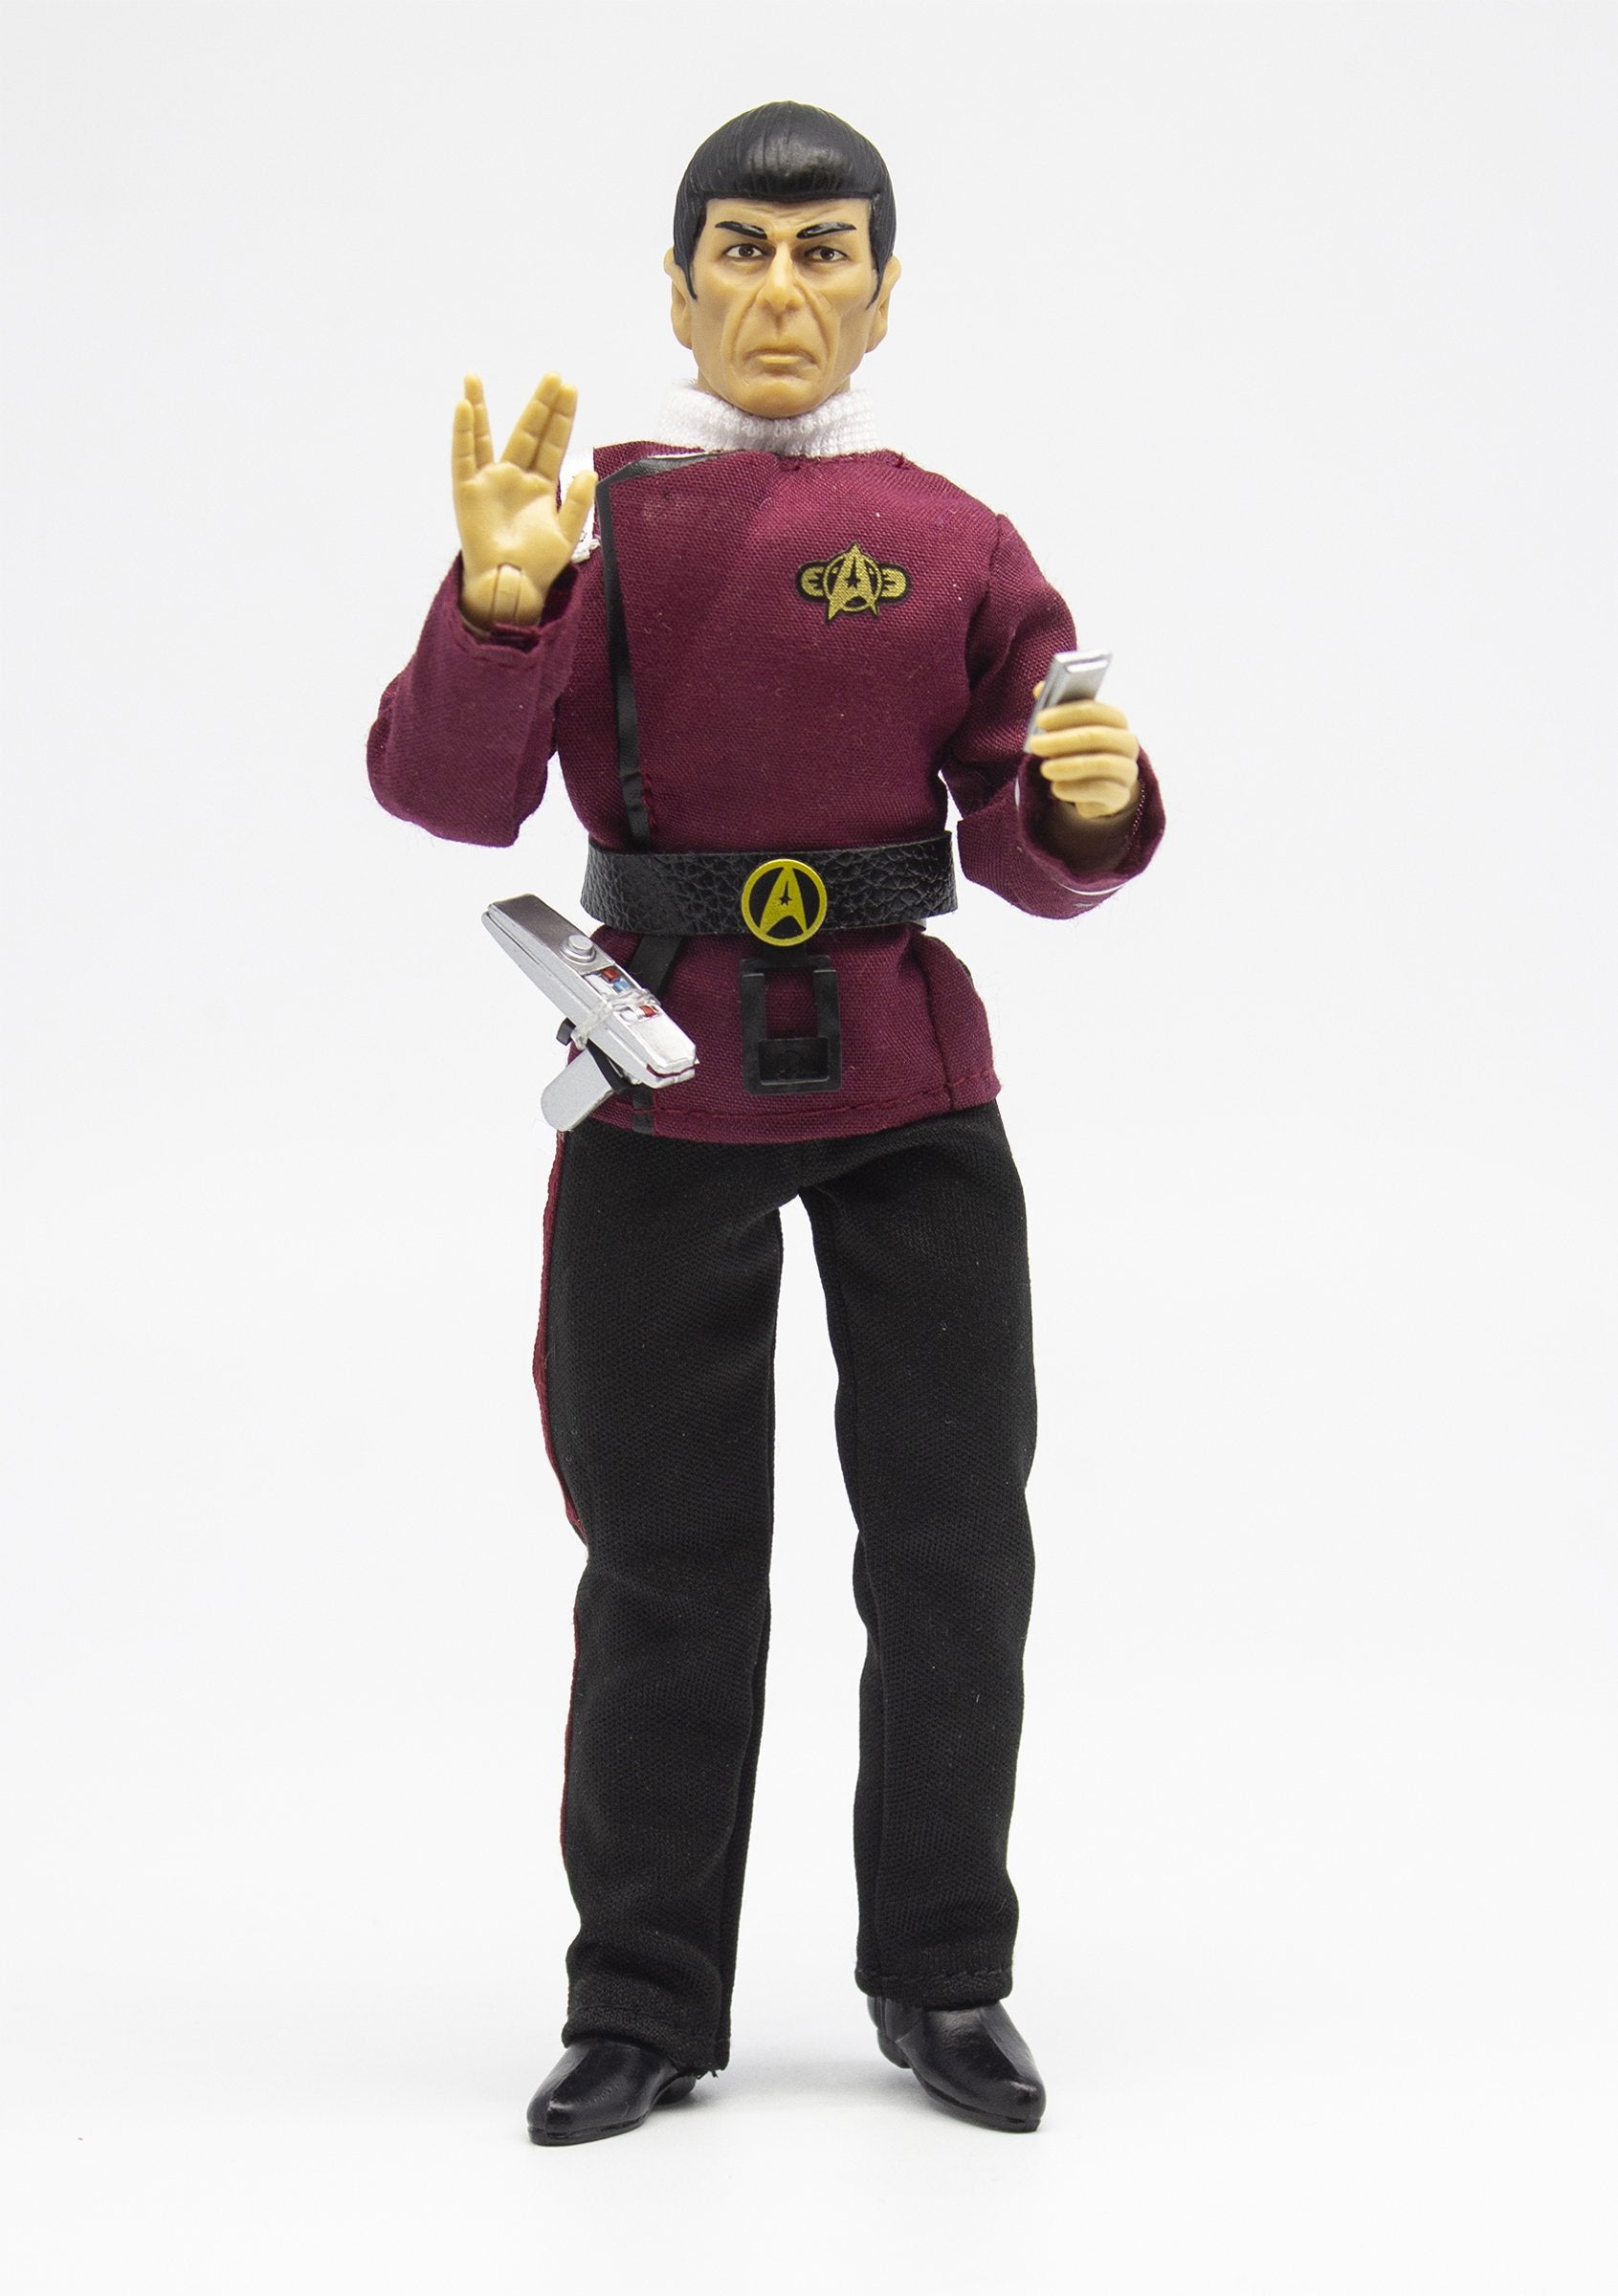 Mego Star Trek Wave 7 - Wrath of Khan - Captain Spock 8" Action Figure - Zlc Collectibles